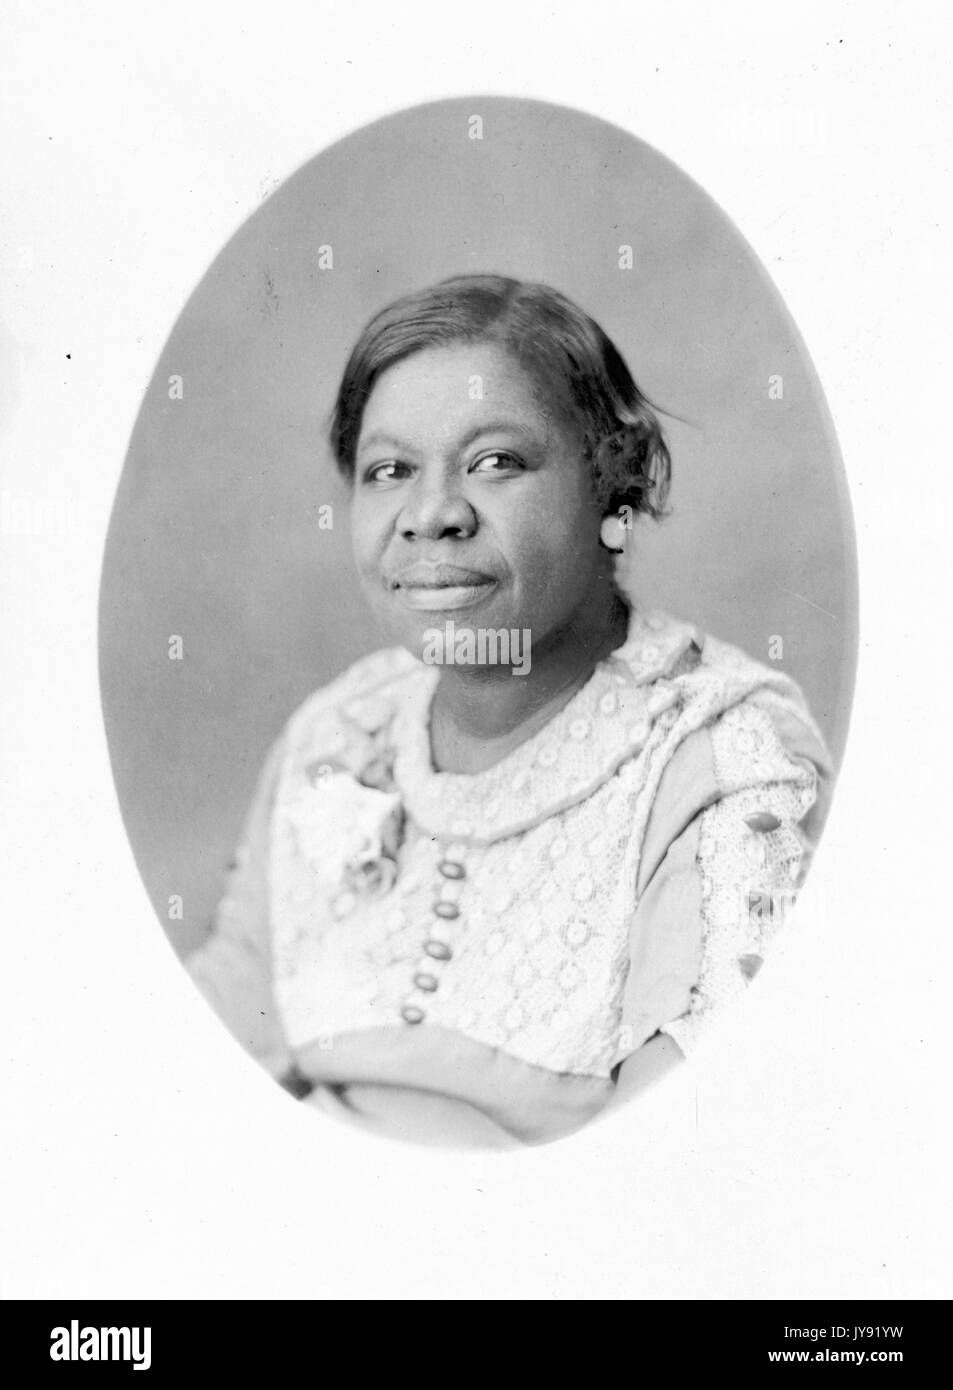 Portrait des Afrikaners - reife Frau im Fotostudio, 1930. Stockfoto